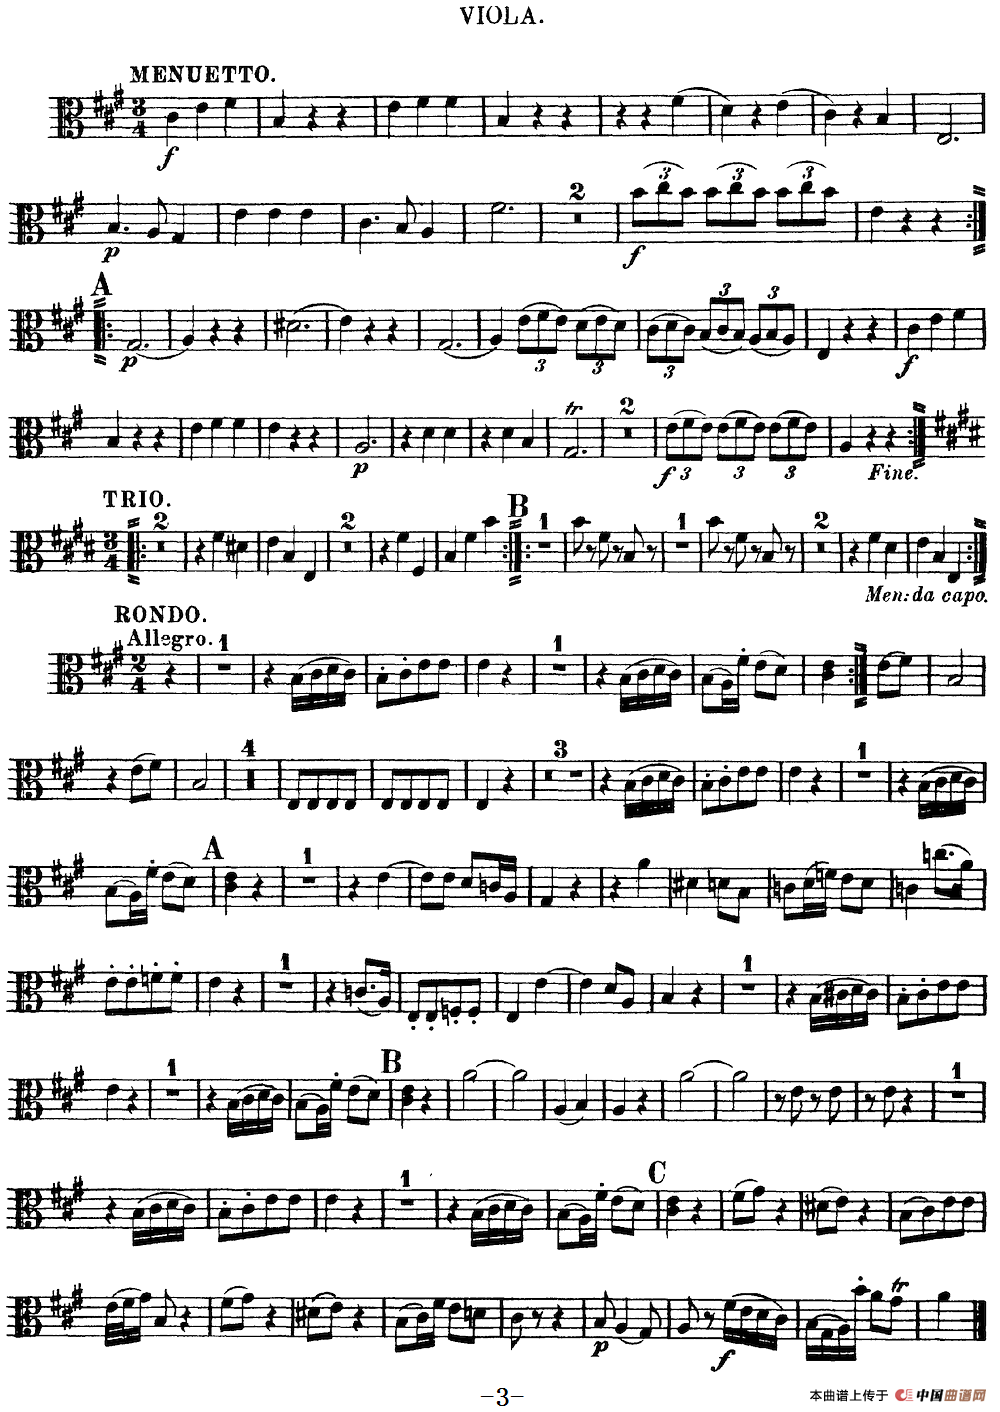 Mozart《Quartet No.9 in A Major,K.169》（Viola分谱）